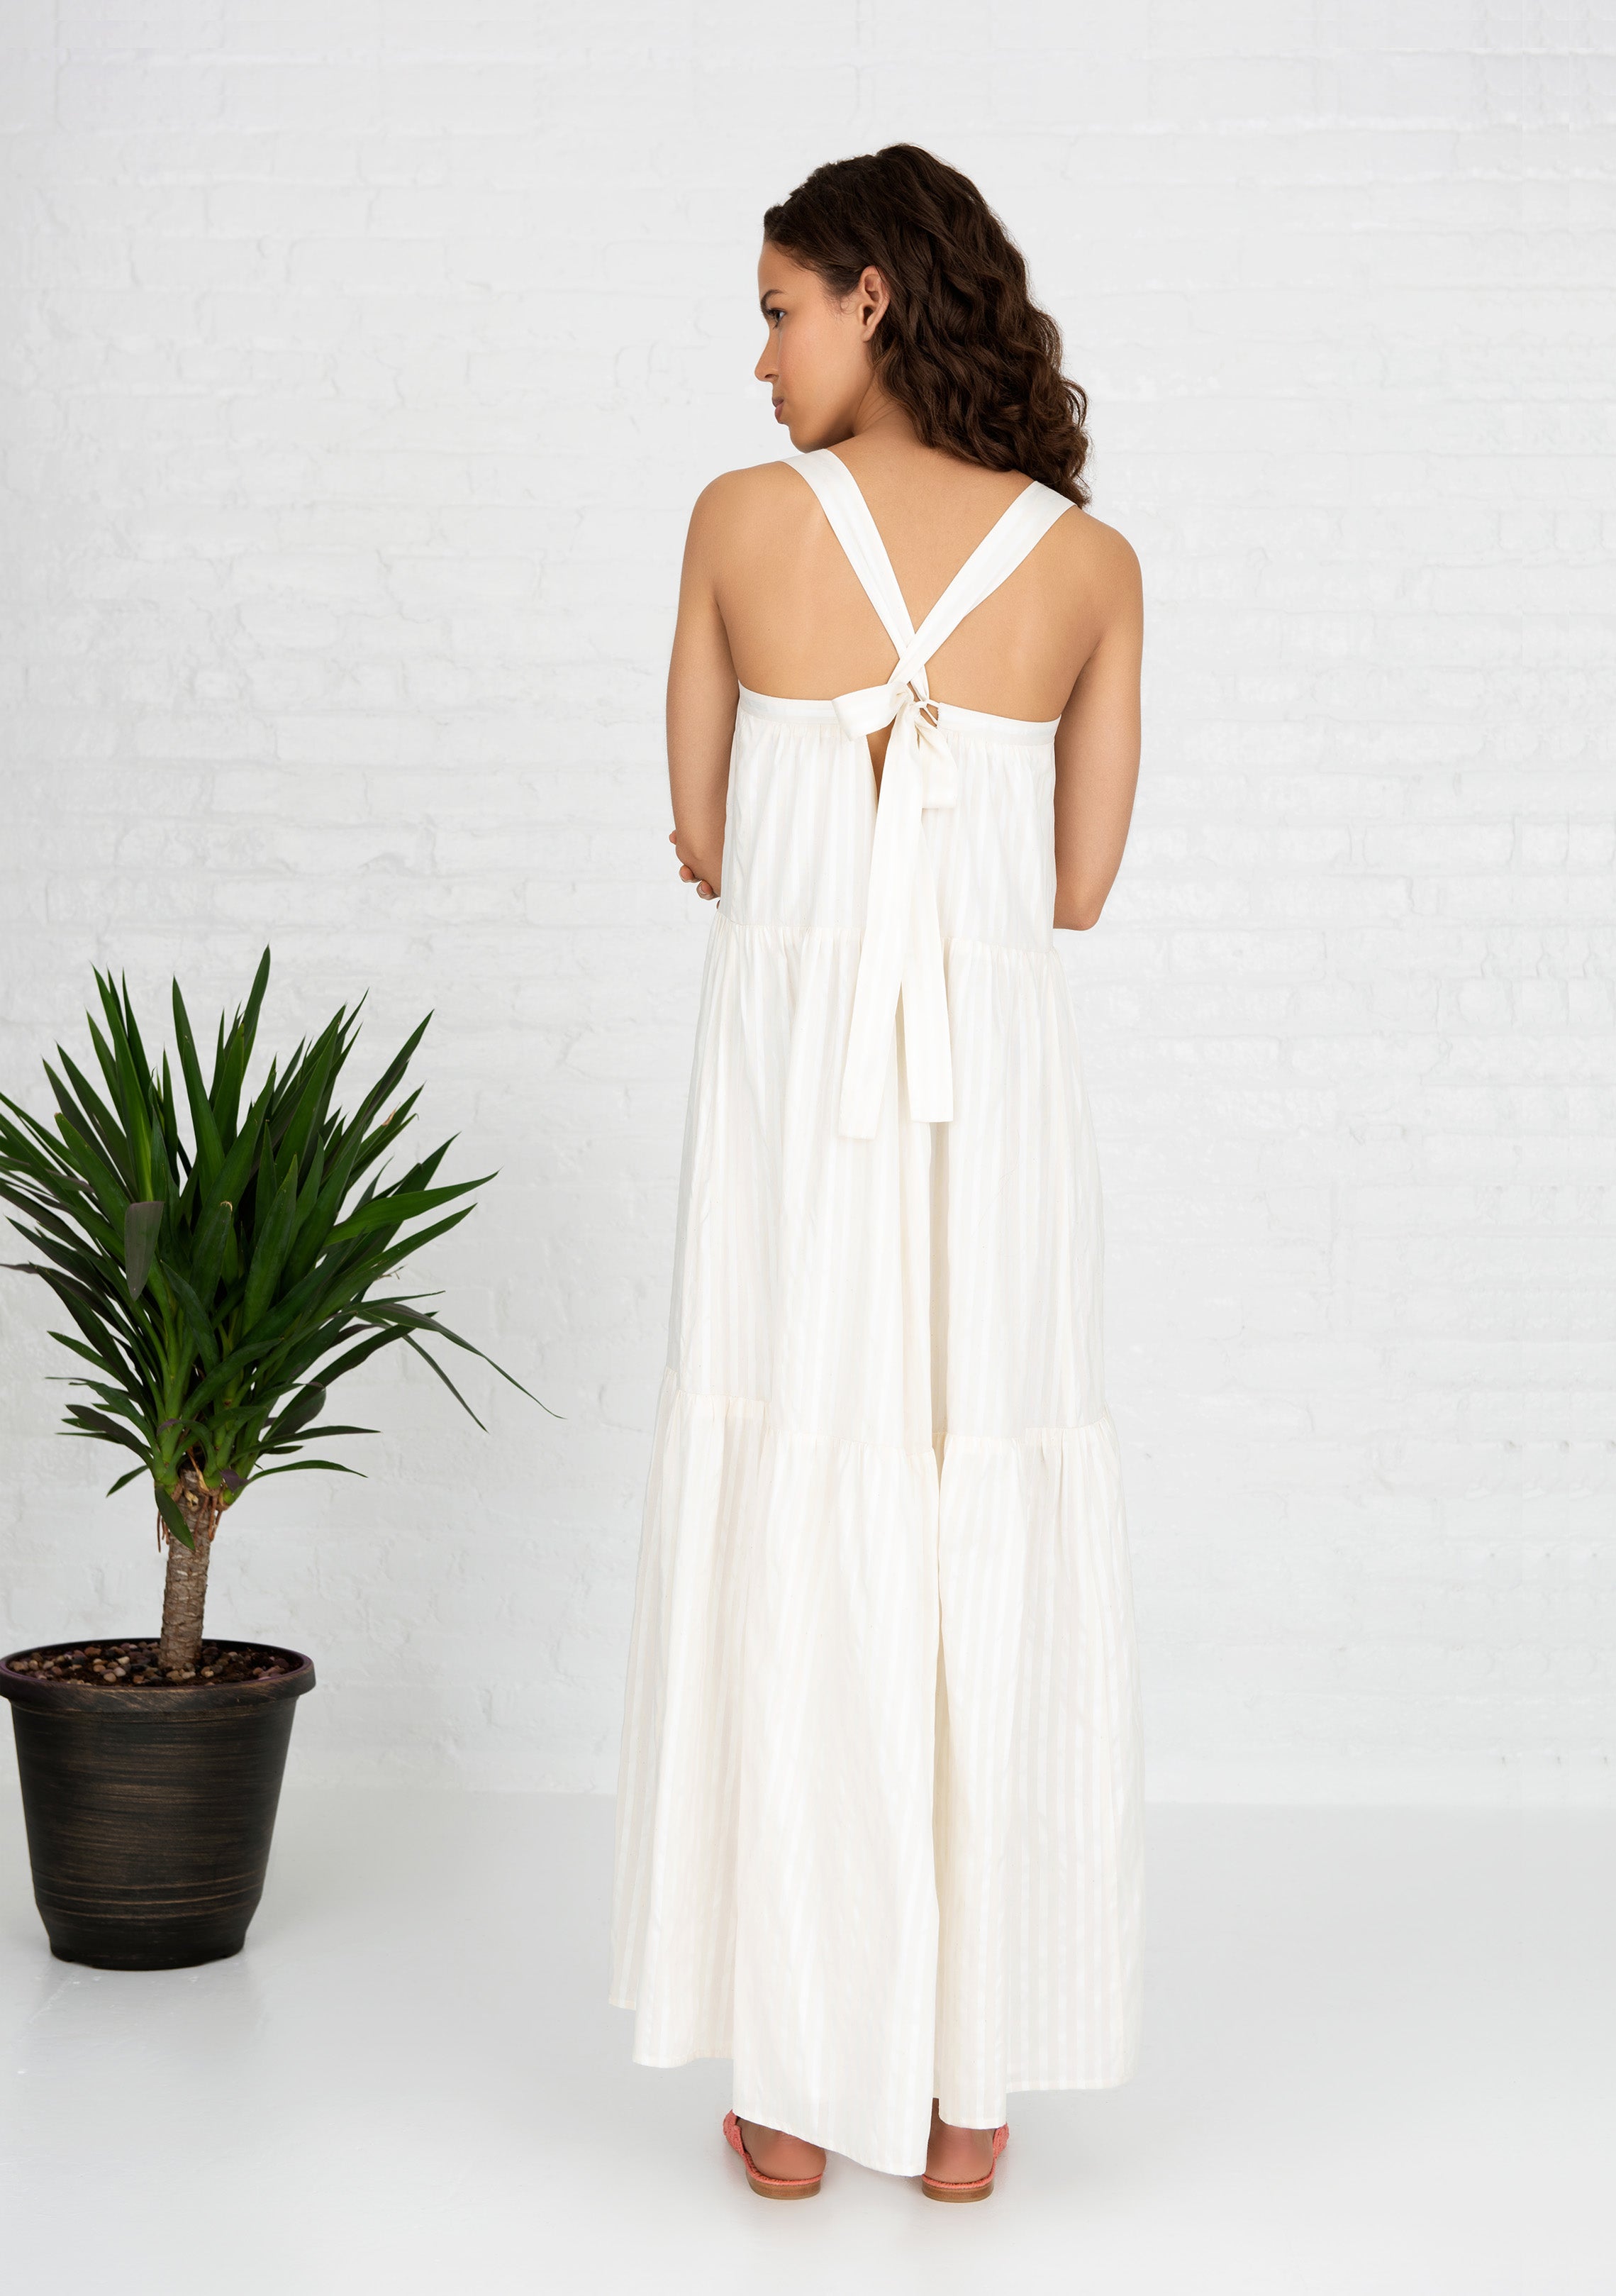 full back profile view of woman wearing white sleeveless cotton silk blend dress